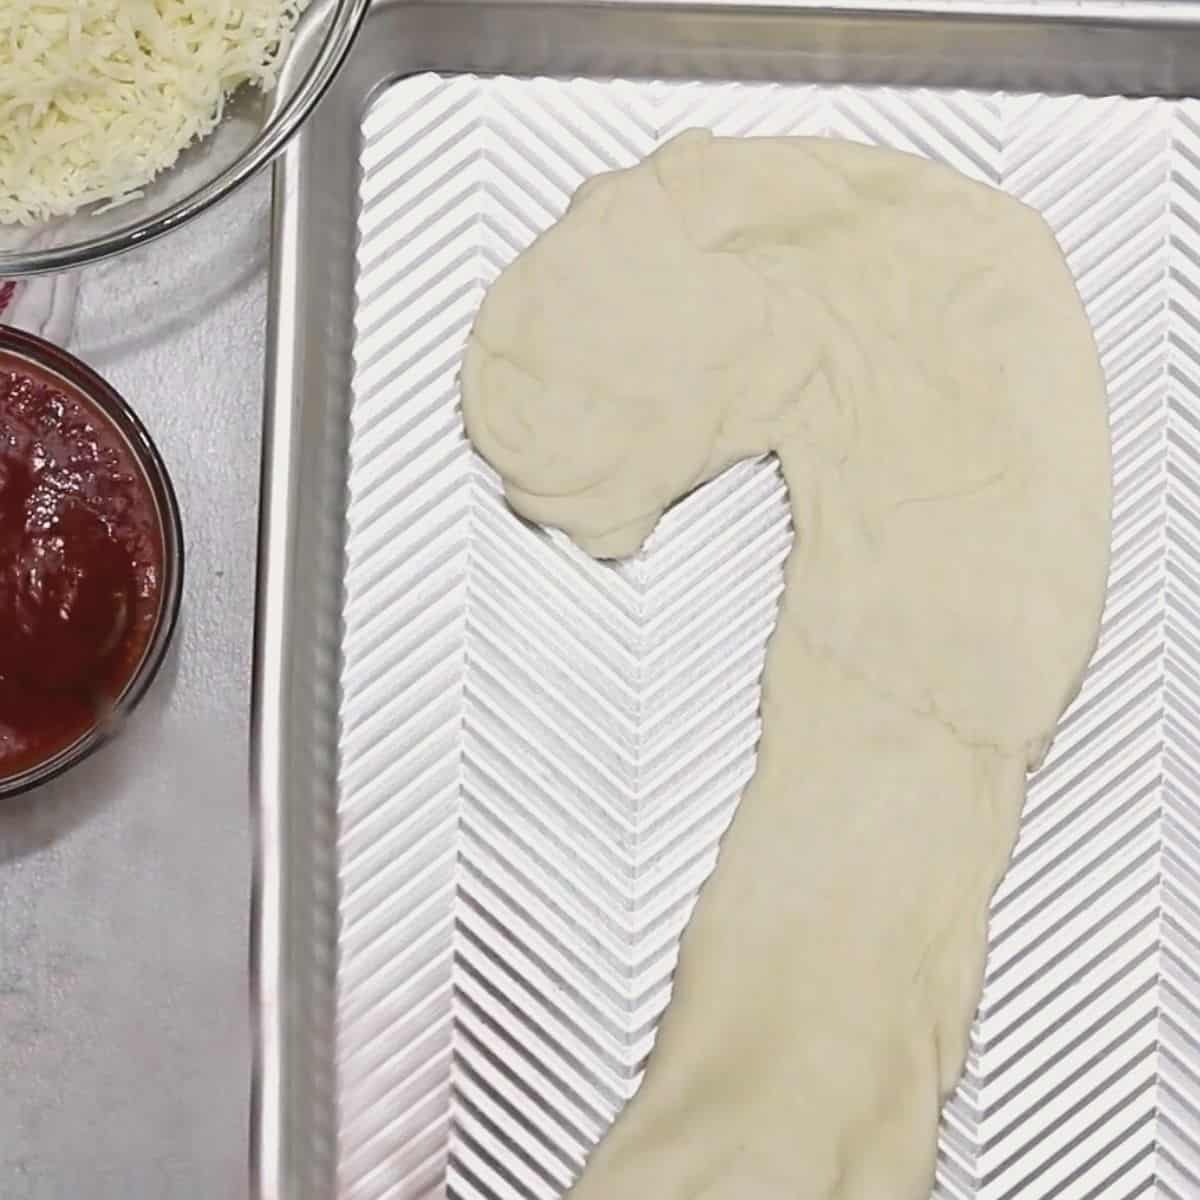 Pizza dough shaped like a candy cane on sheet pan.